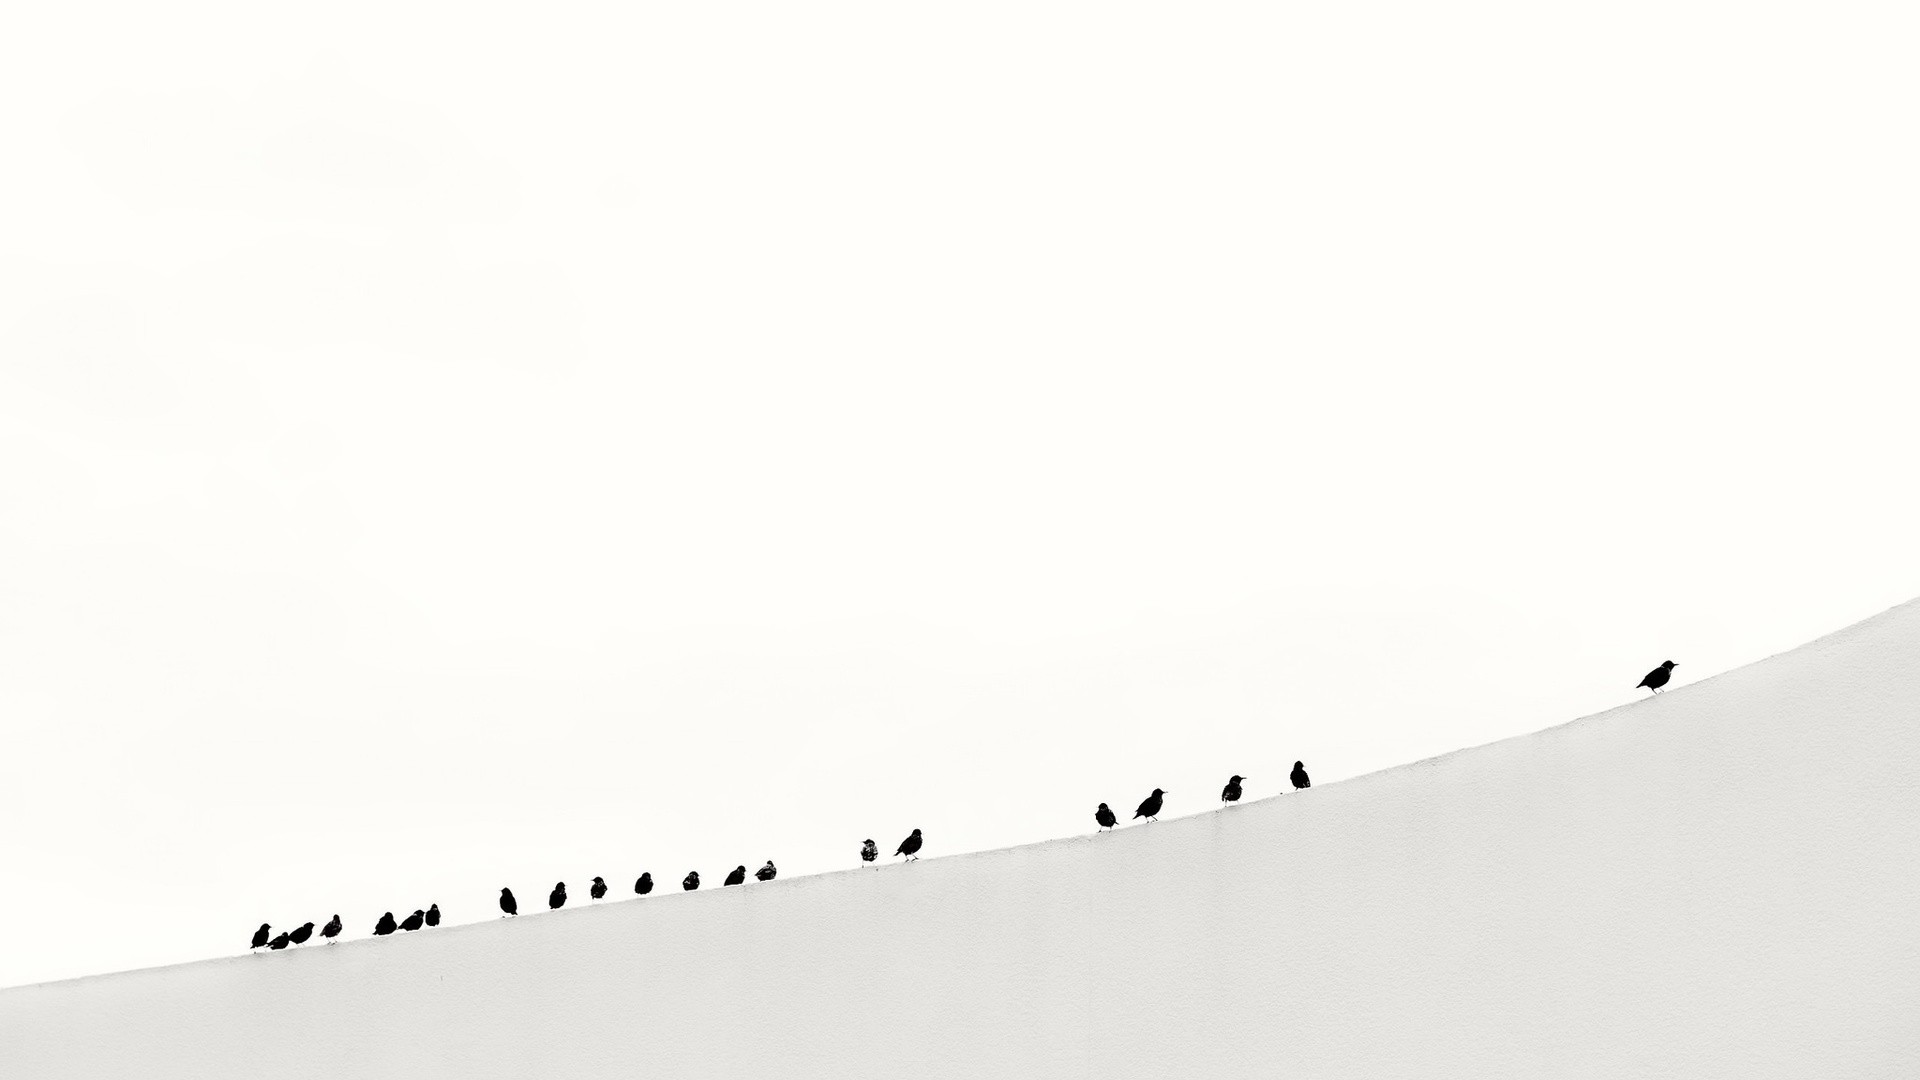 General 1920x1080 nature animals birds monochrome winter snow hills minimalism photography